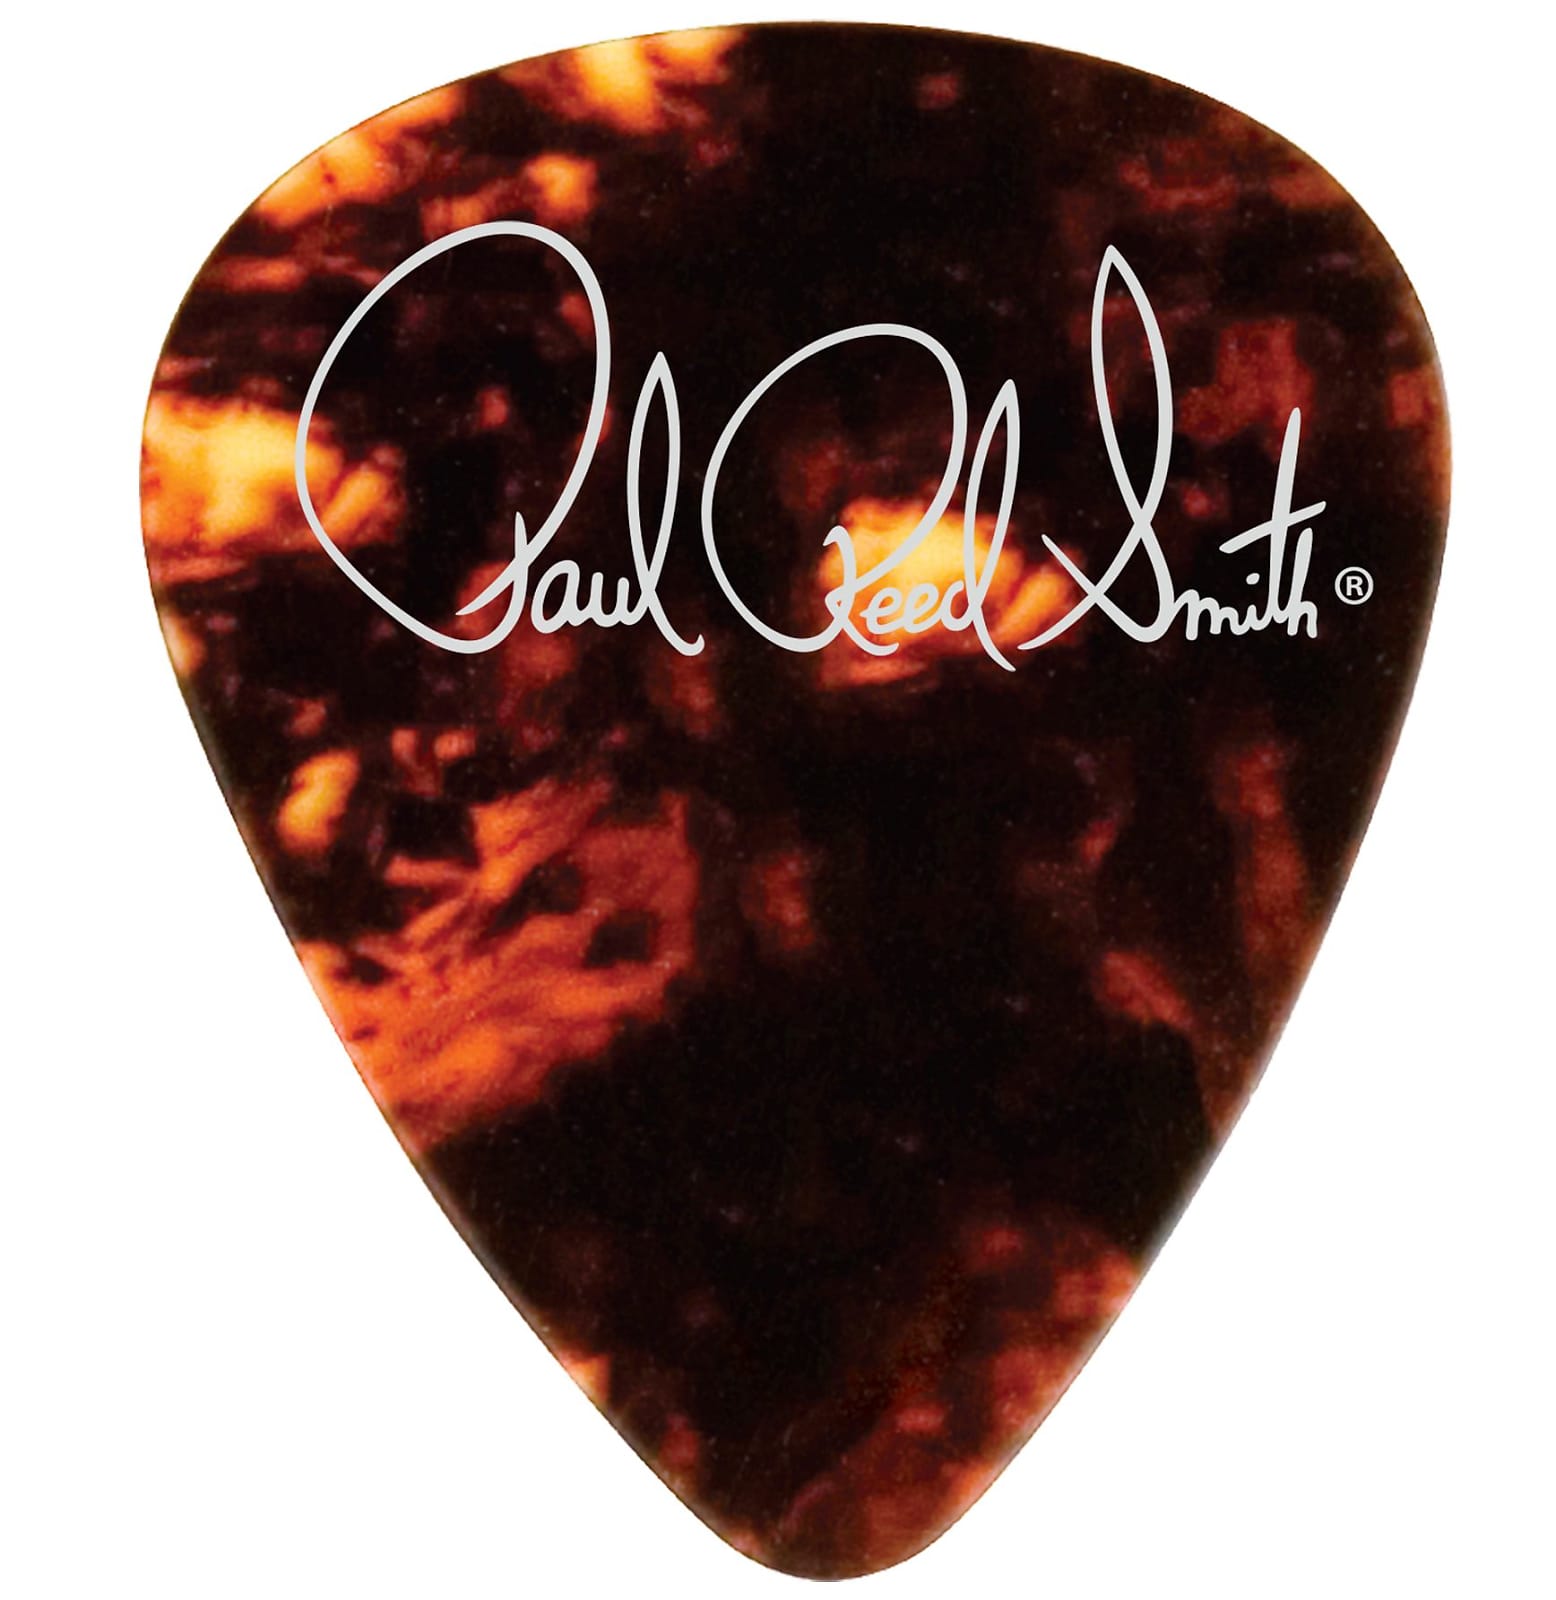 Paul Reed Smith PRS Tortoise Celluloid Guitar Picks (12) – Heavy